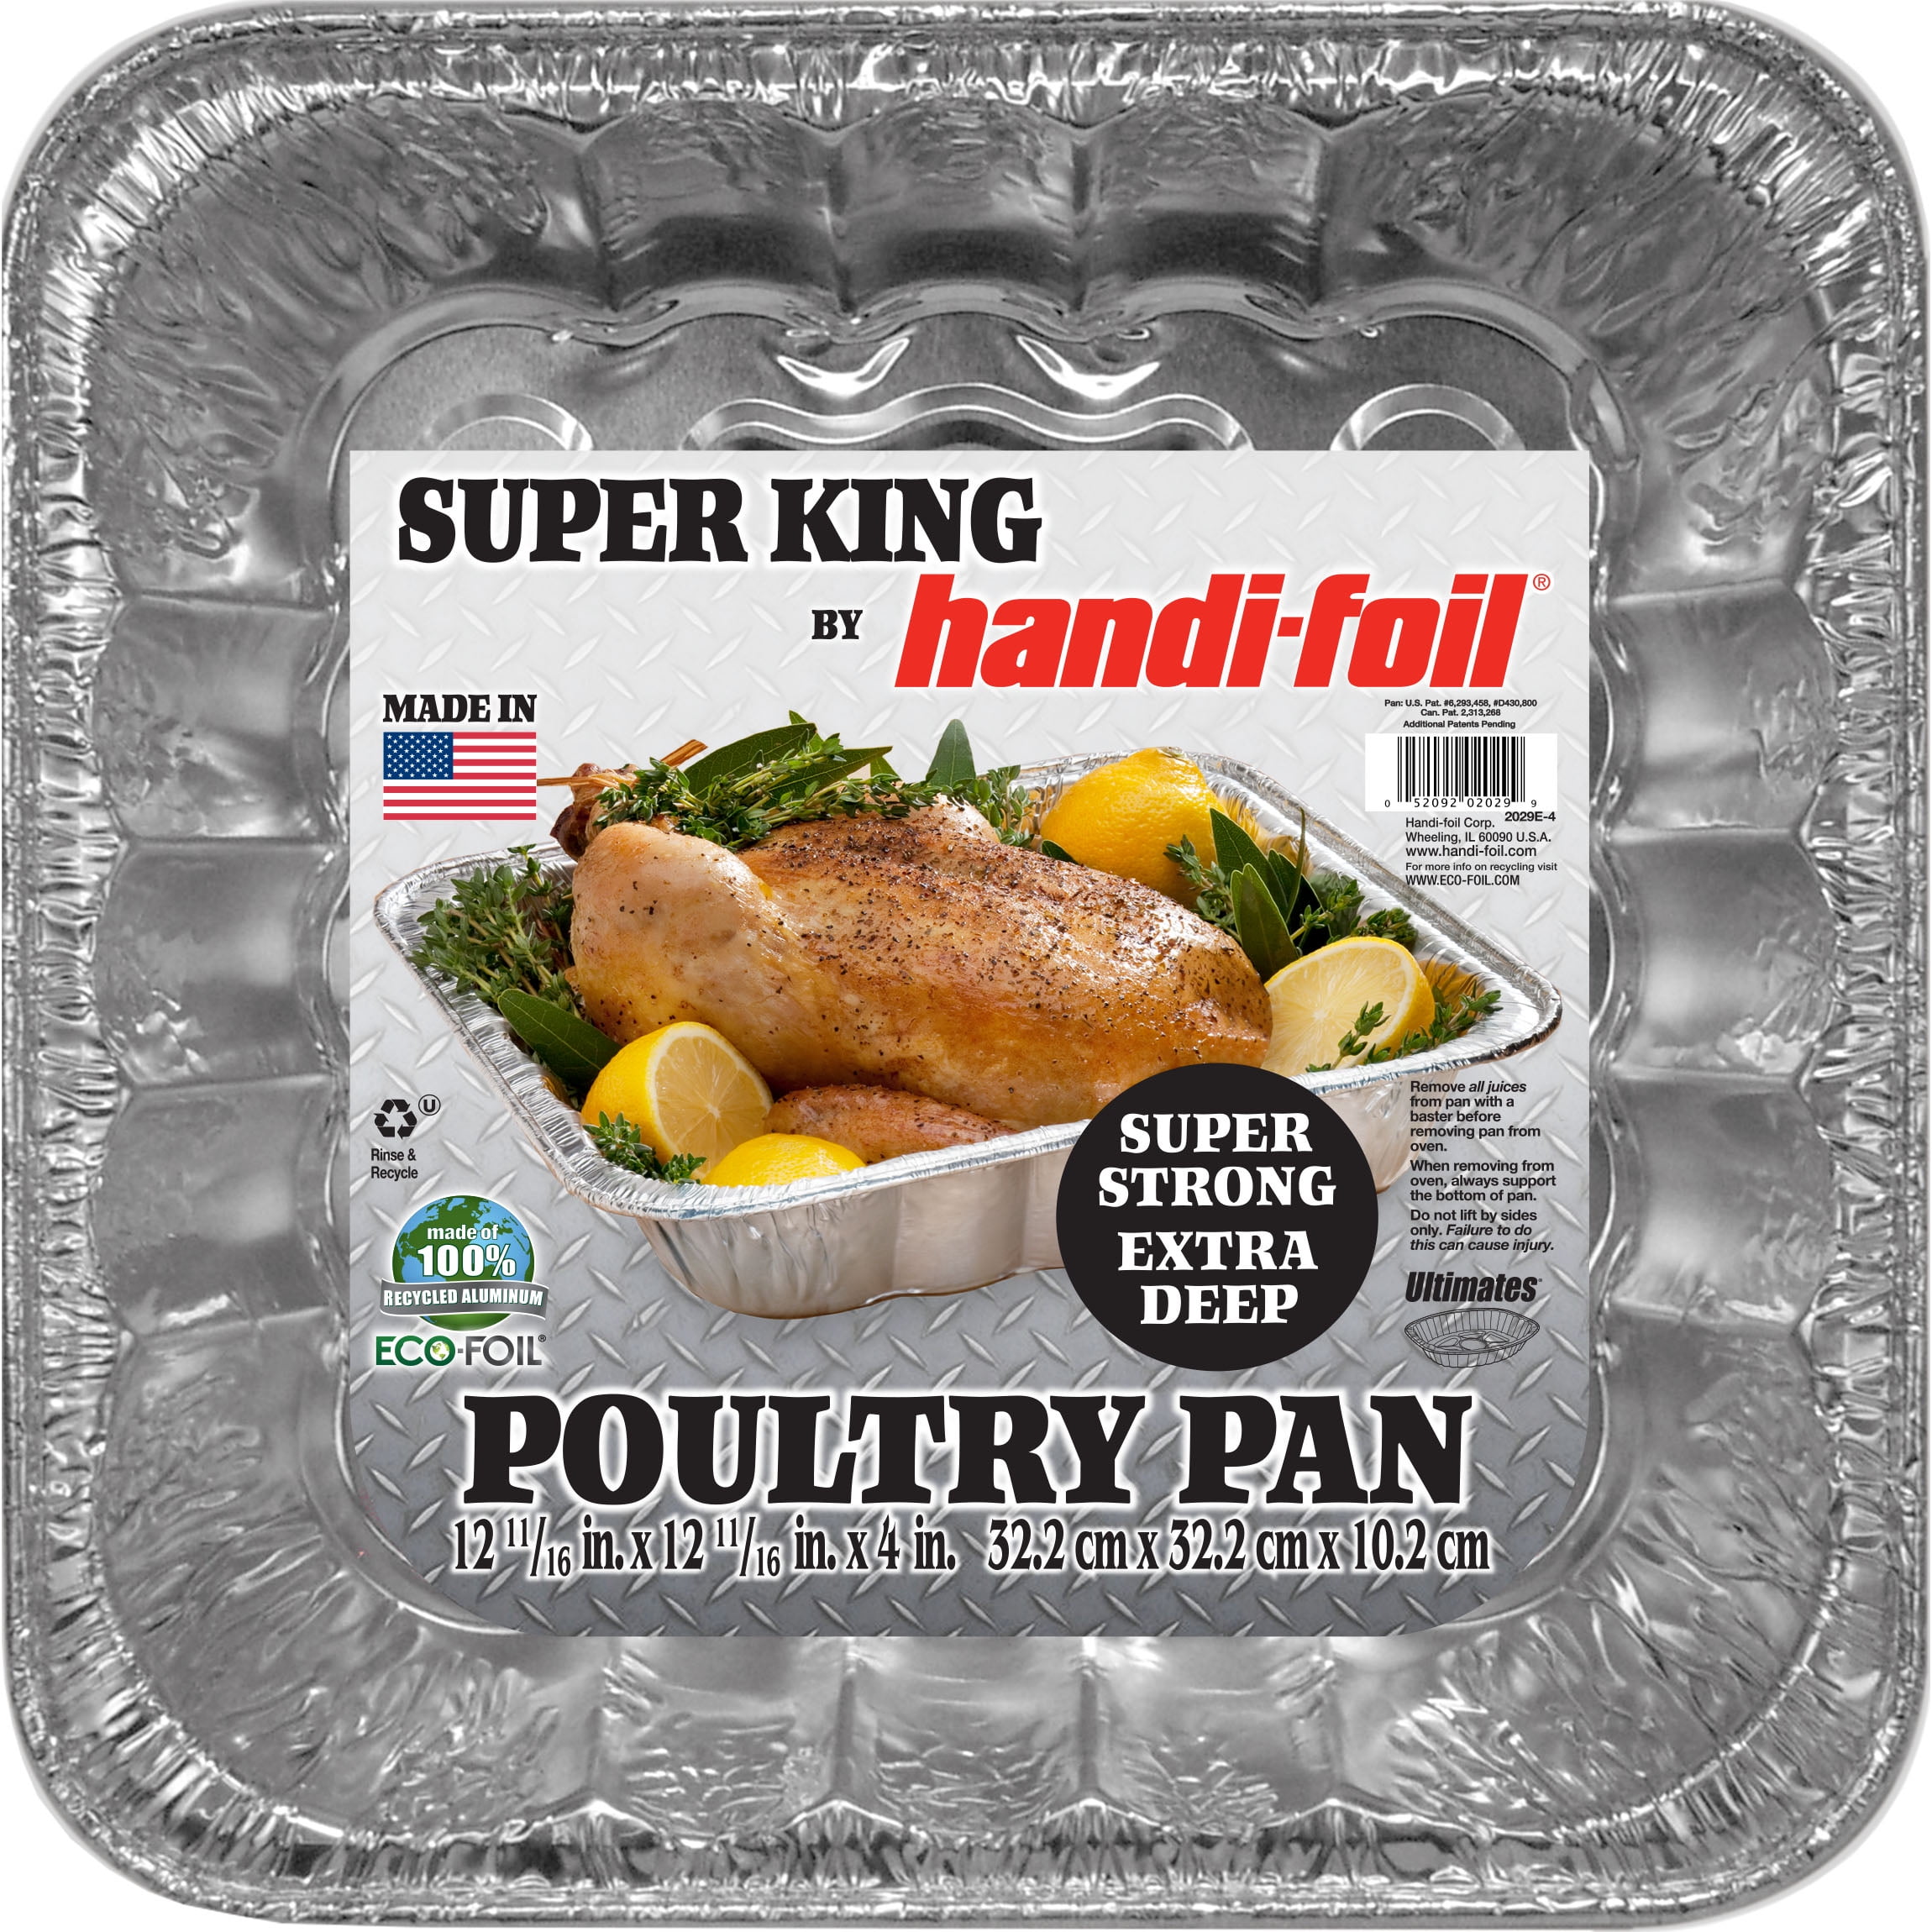 TigerChef Disposable Aluminum Oval Turkey Roasting Pan with Handle Rack Set  18 x 13 - 12 pcs